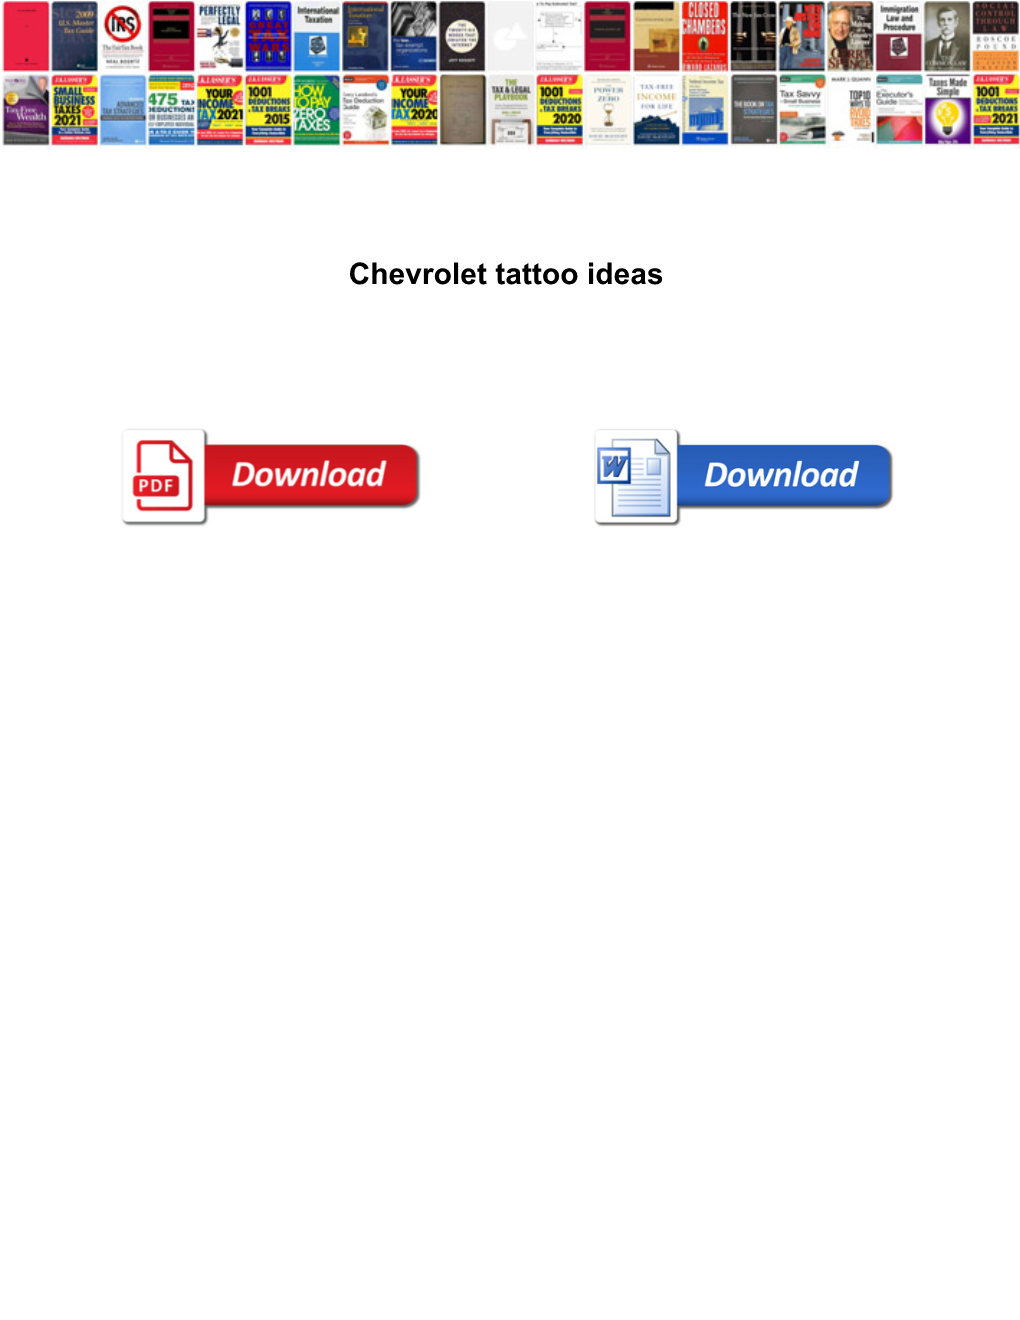 Chevrolet Tattoo Ideas Latest News